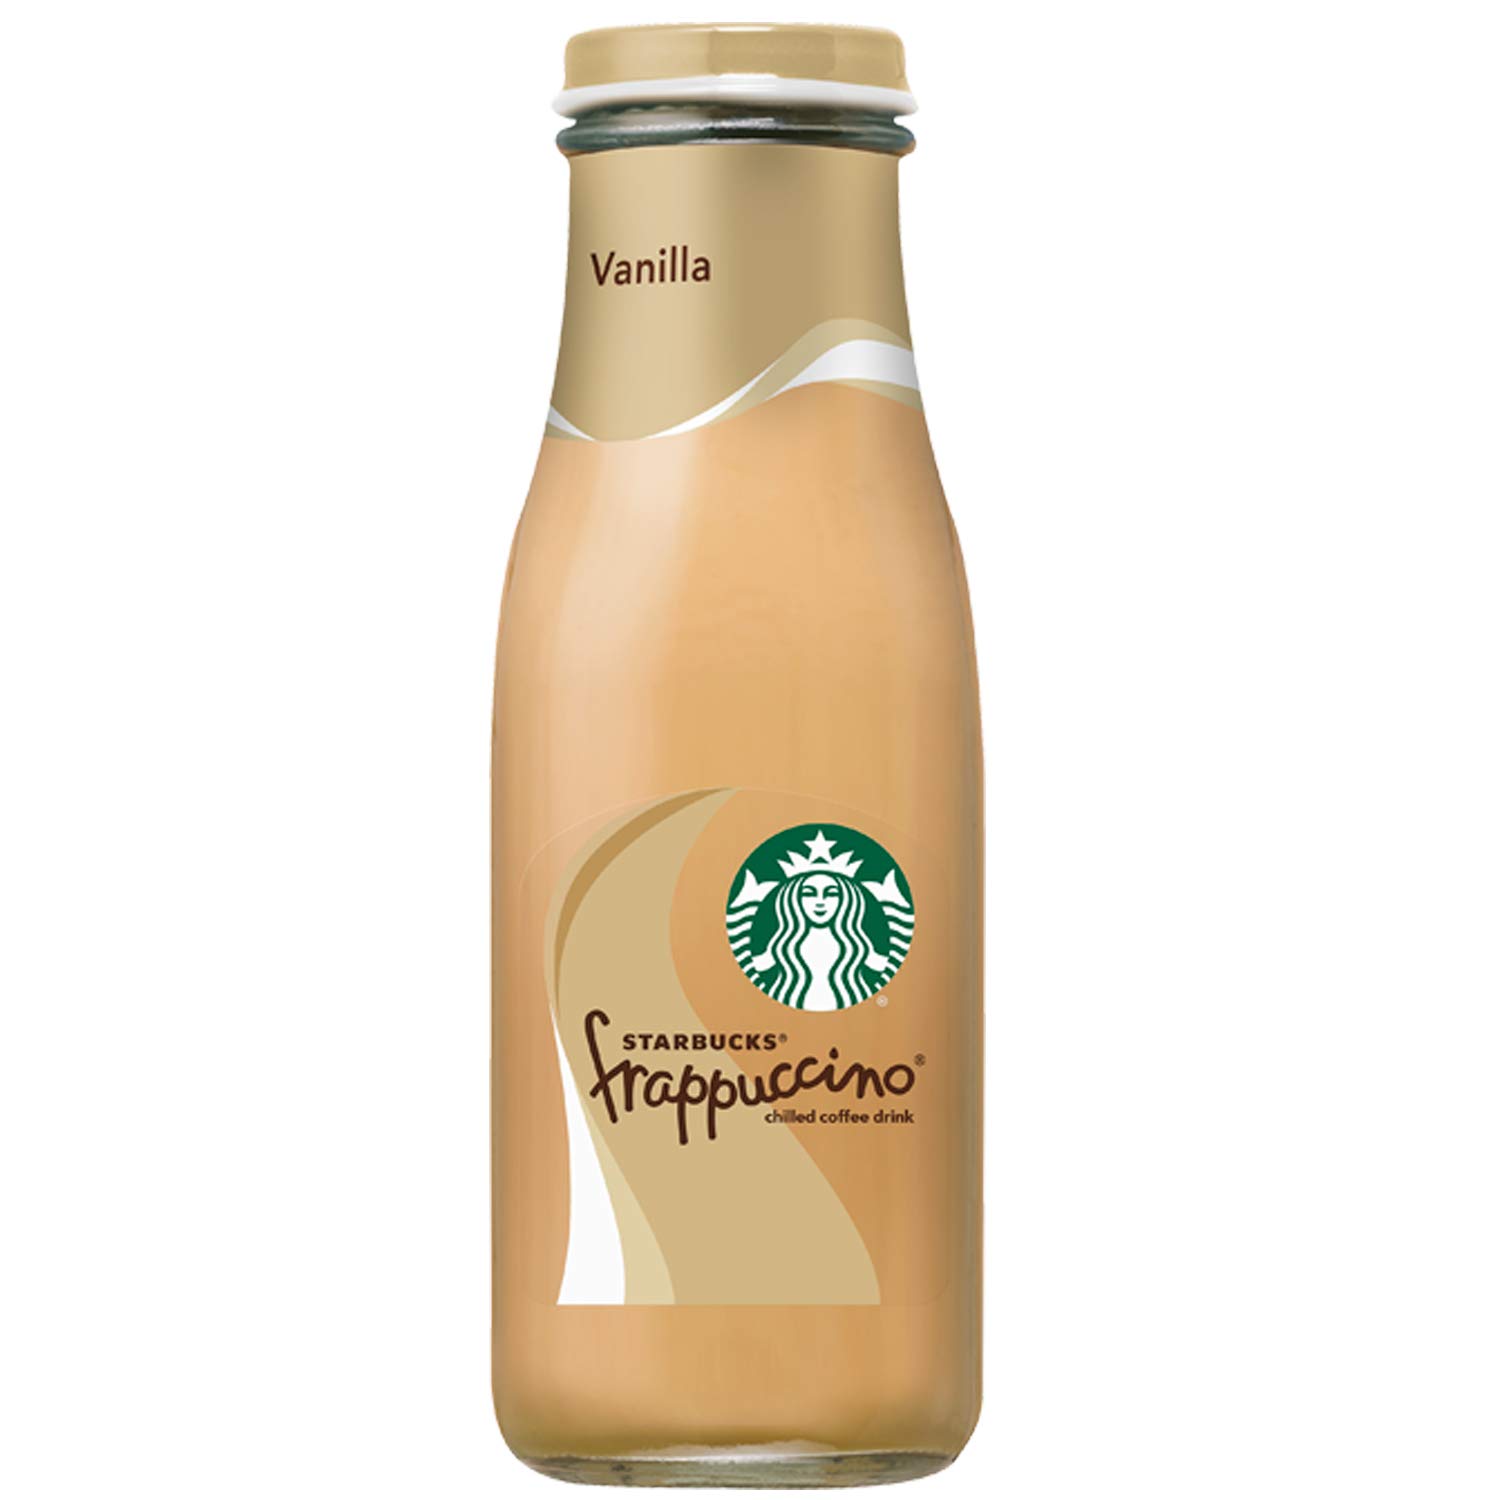 15-Count of 9.5oz Starbucks Frappuccino Coffee Drink (Vanilla) $12.79 w/s&s